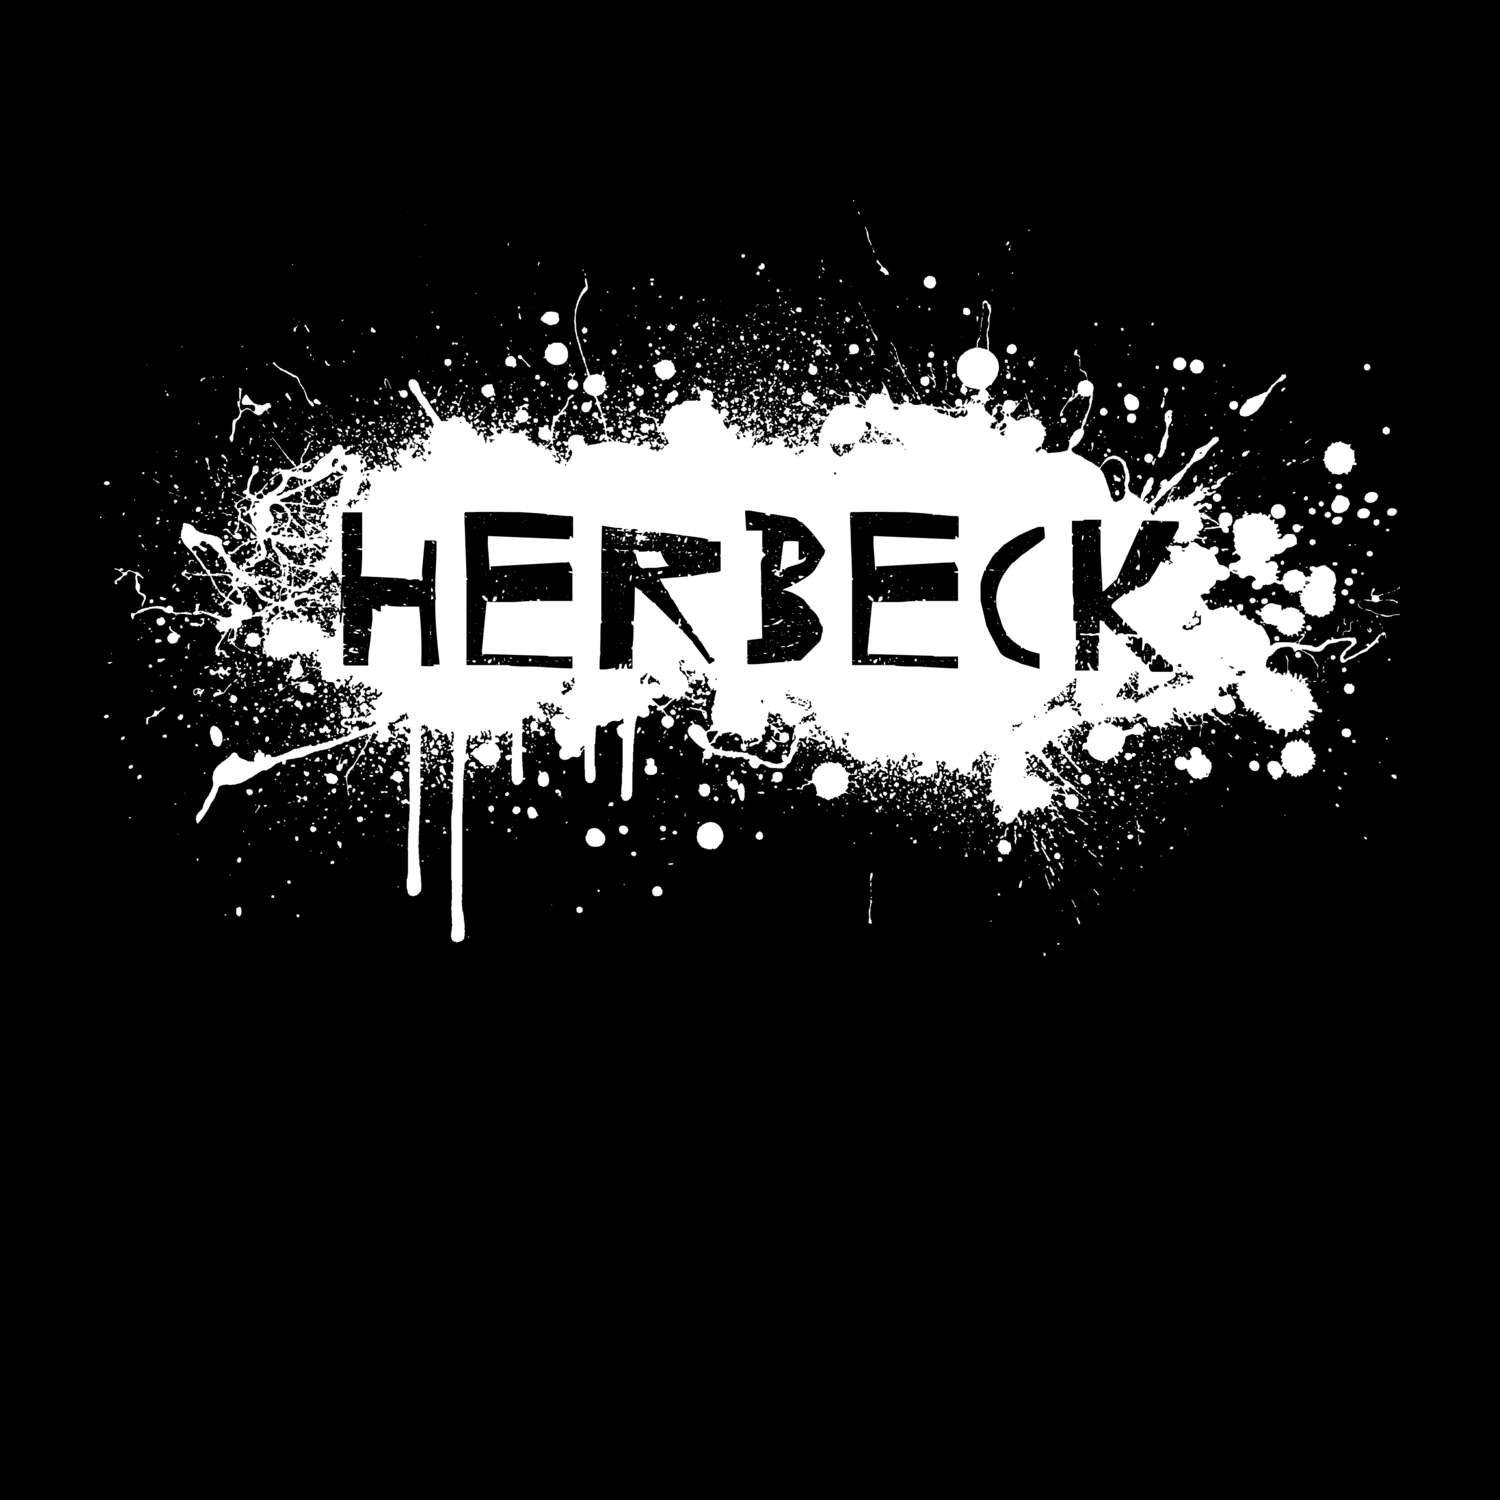 Herbeck T-Shirt »Paint Splash Punk«